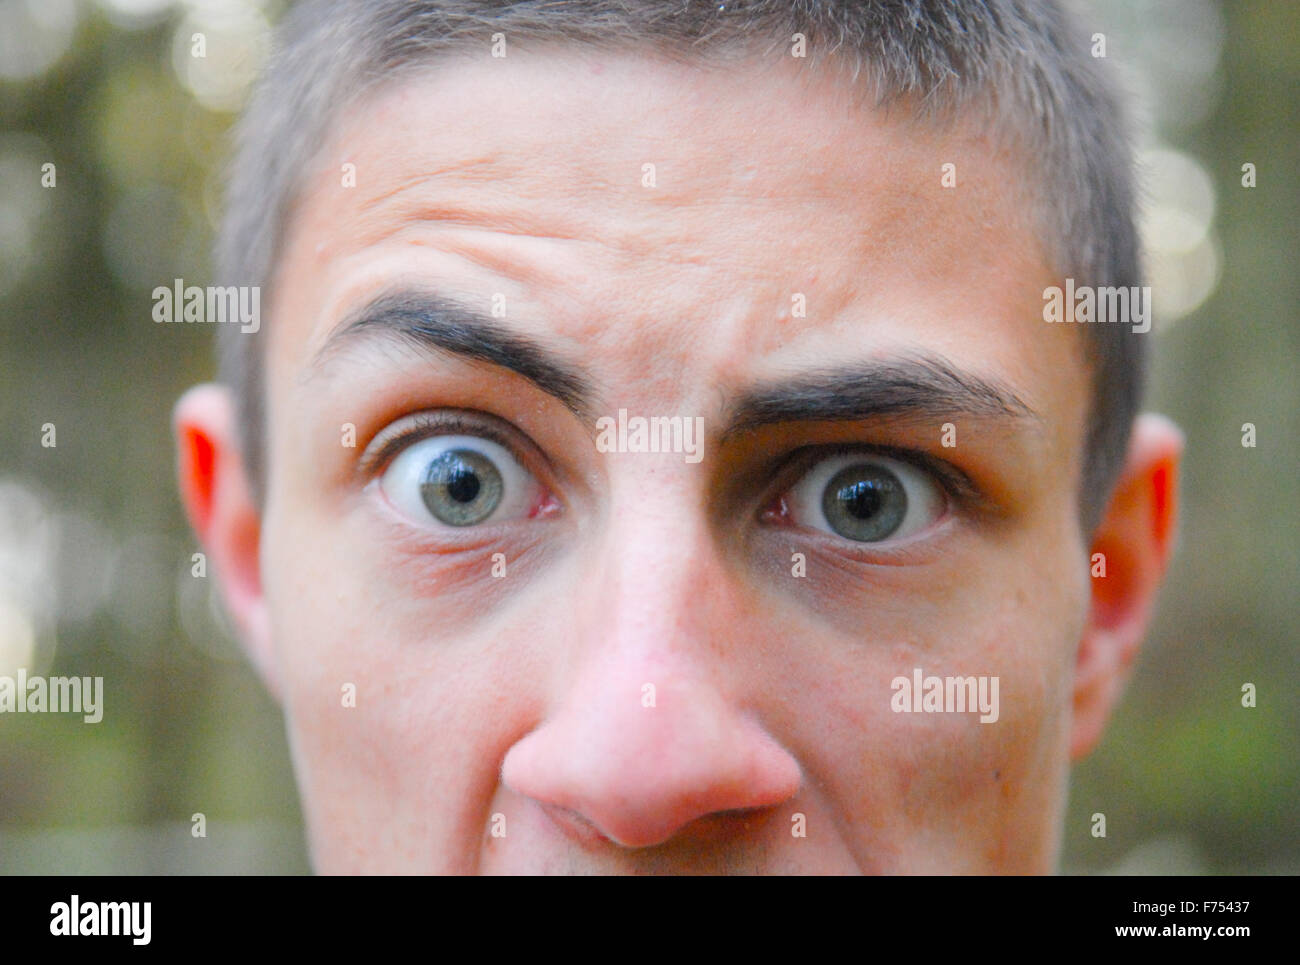 Teenage boy with regard clair en close-up en forêt. Banque D'Images